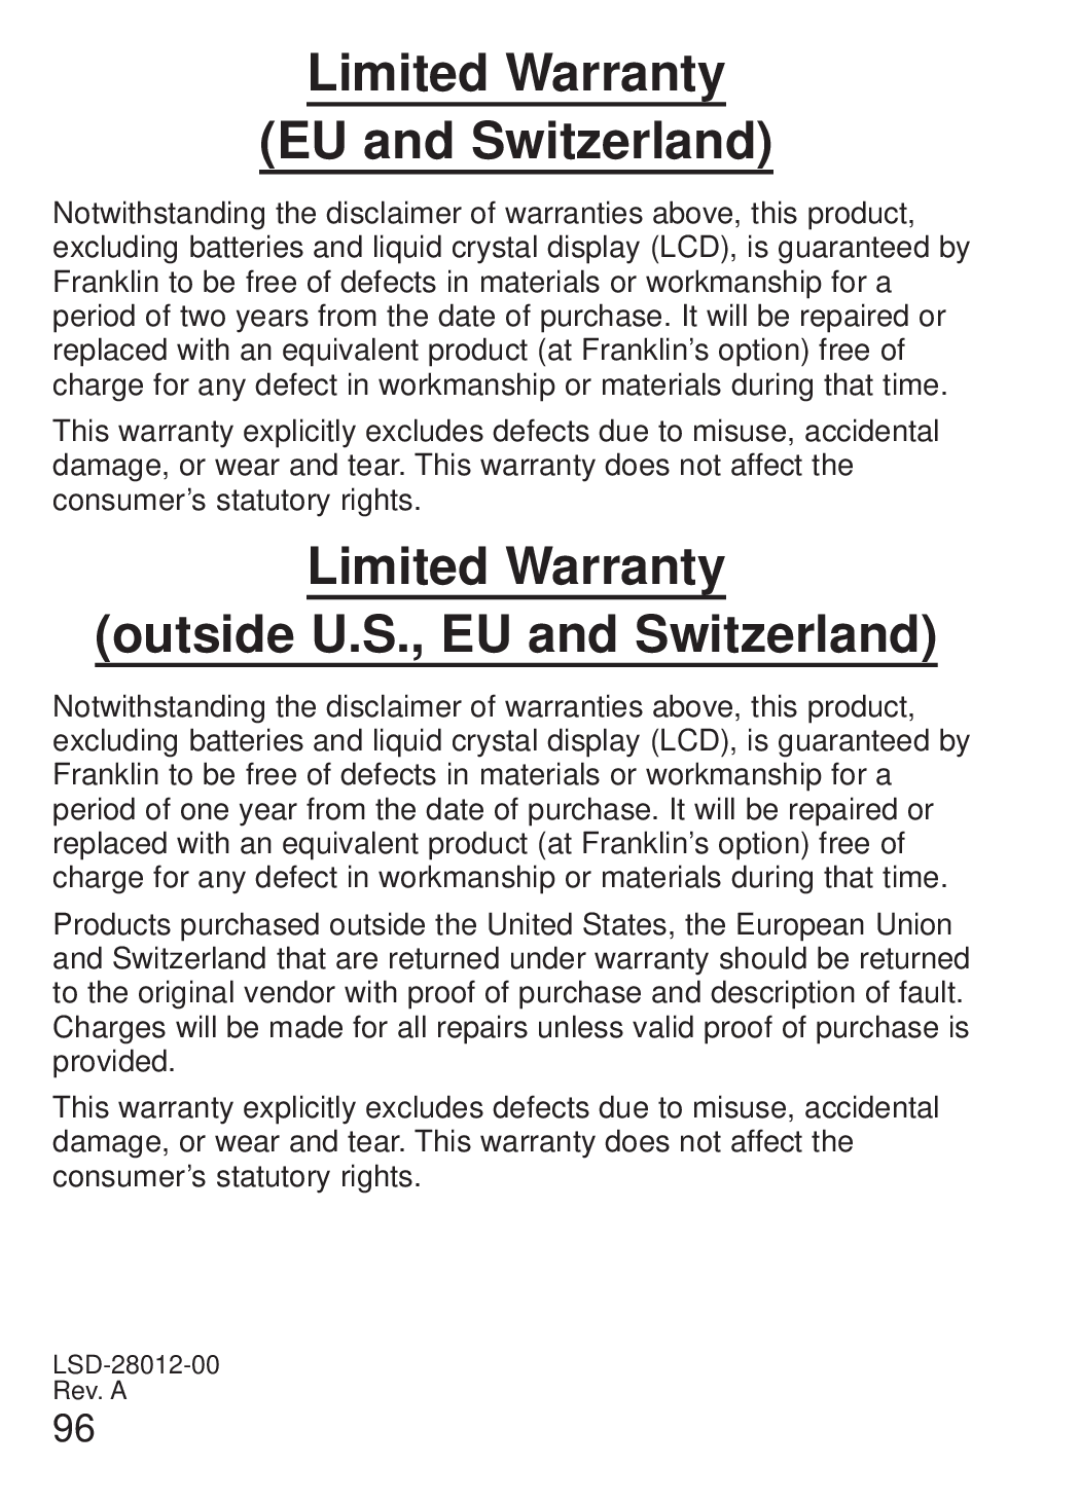 Franklin FQS-1870 manual Limited Warranty EU and Switzerland, Limited Warranty outside U.S., EU and Switzerland 